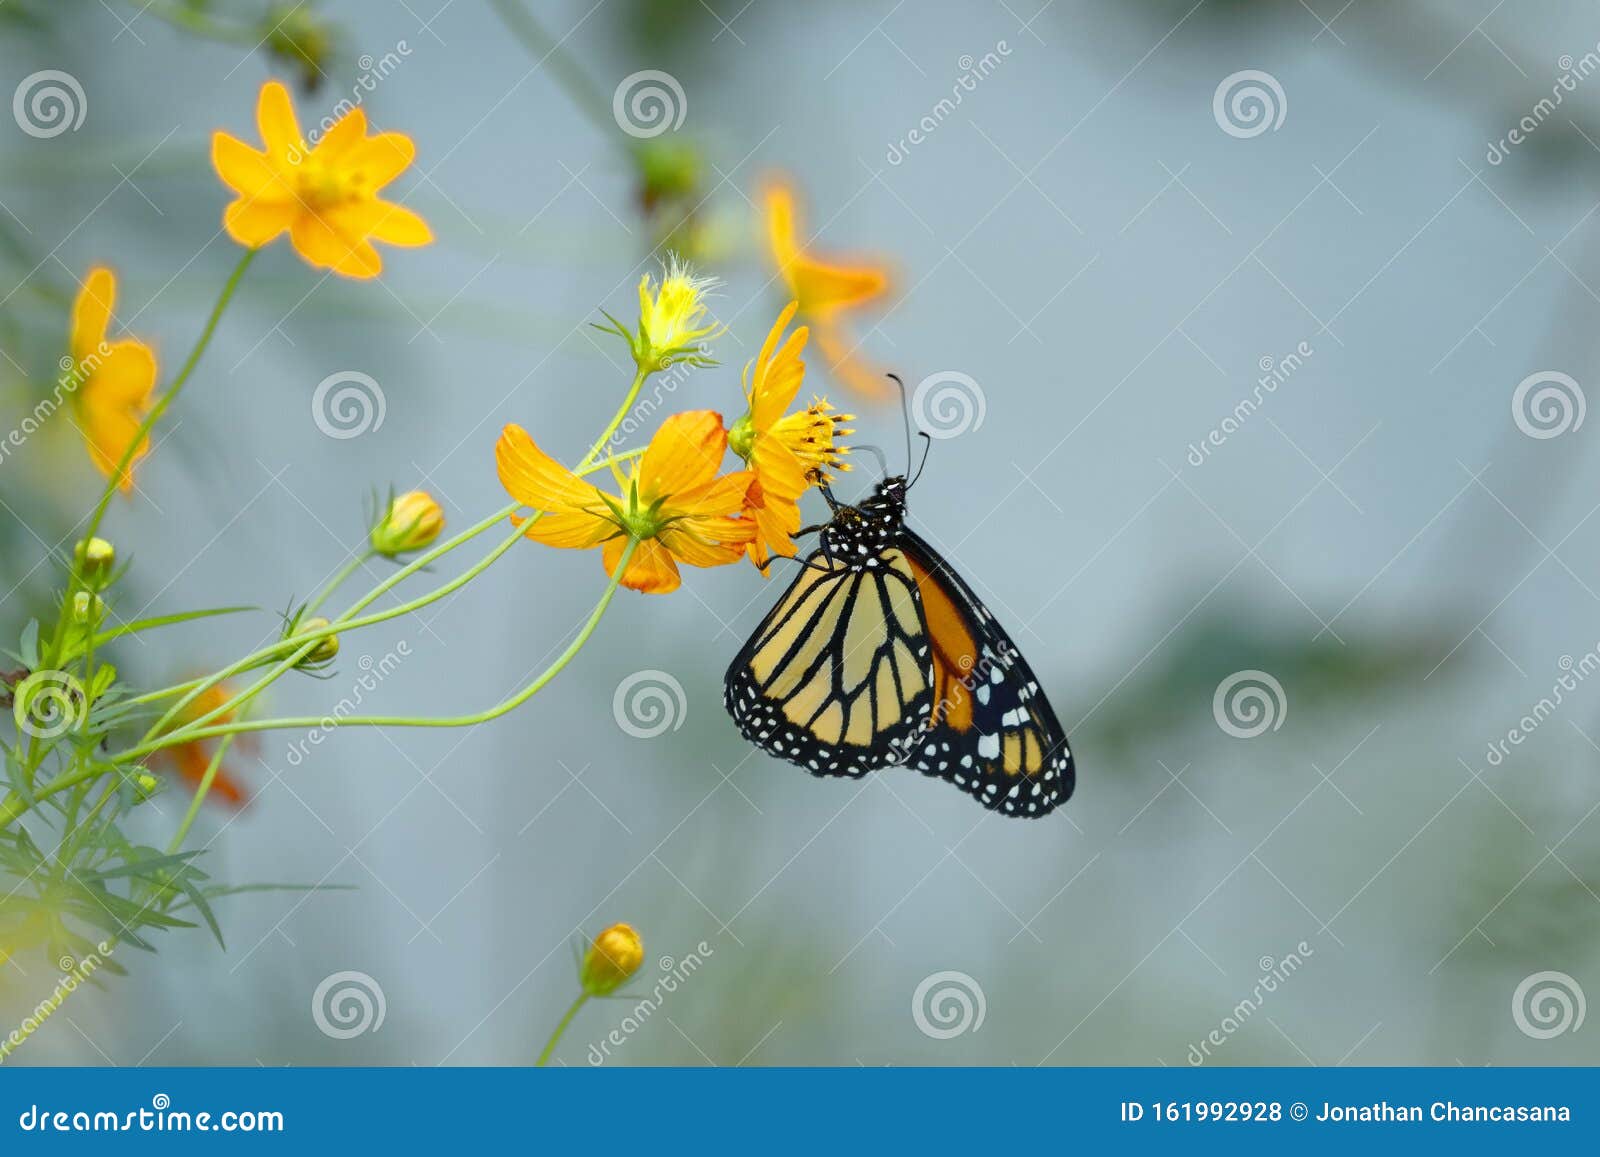 mariposa monarca del sur danaus erippus